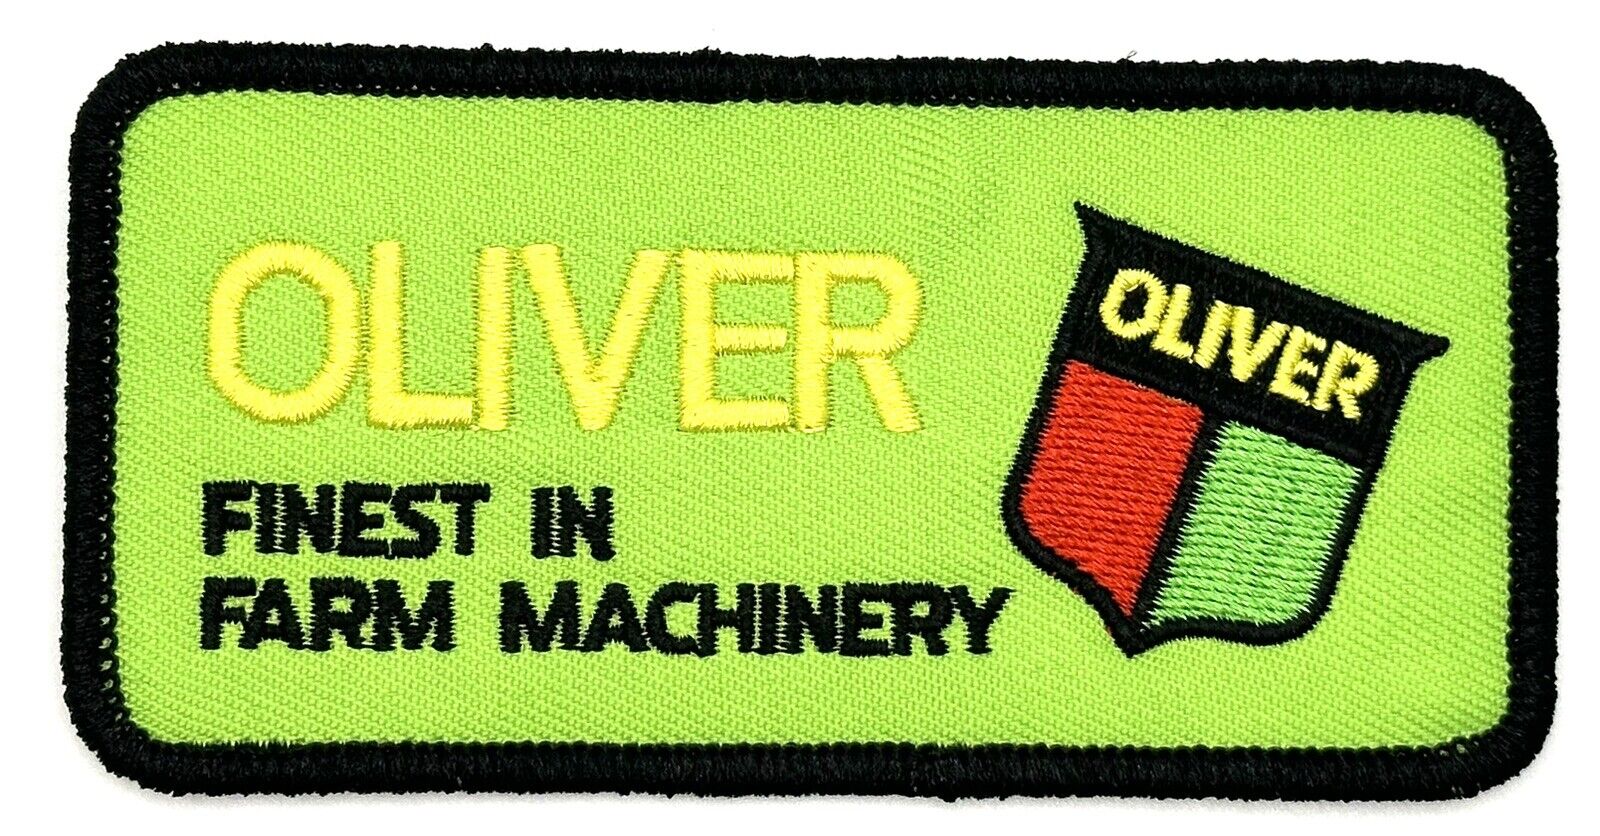 Oliver Tractors Farm Machinery Equipment Vintage Style Retro Patch Hat Cap